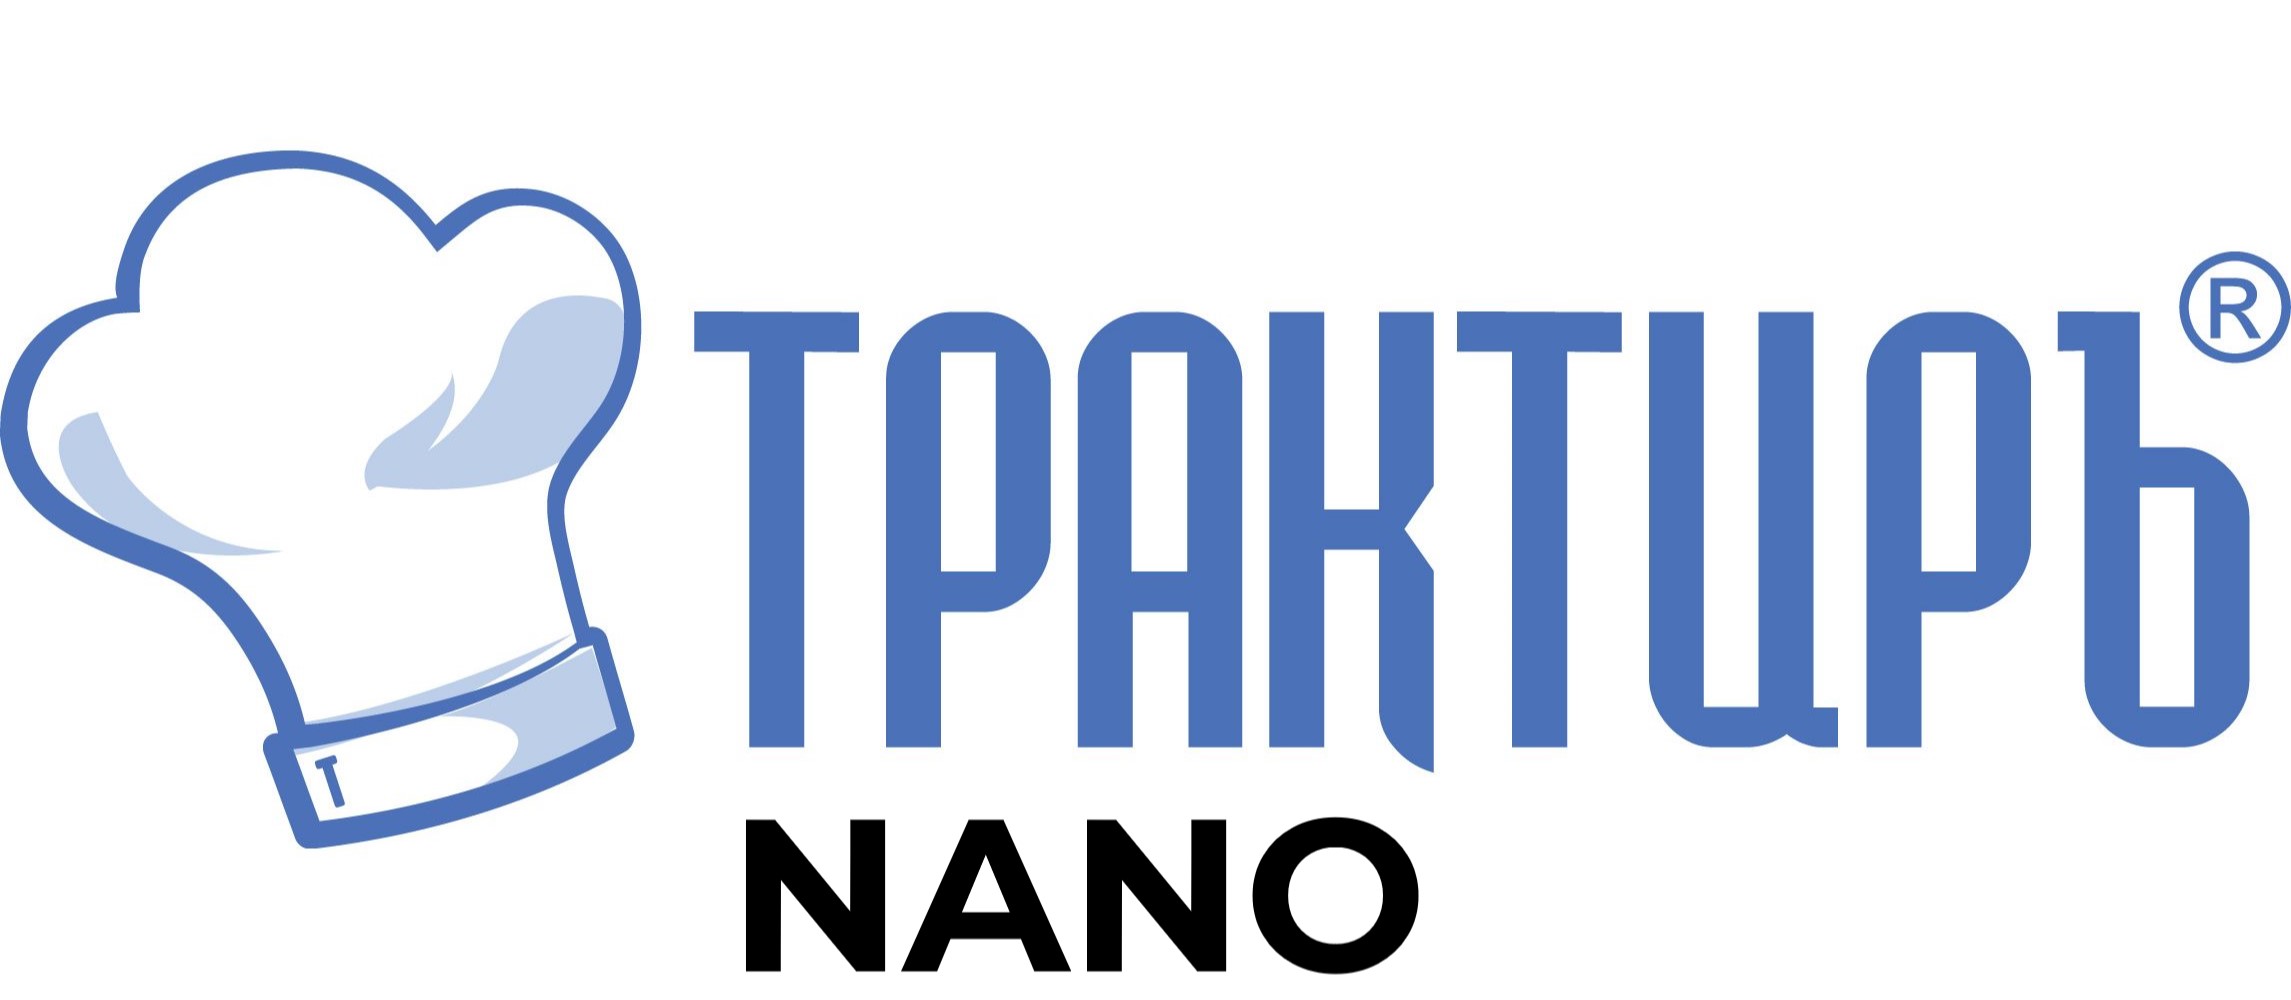 Конфигурация Трактиръ: Nano (Основная поставка) в Норильске